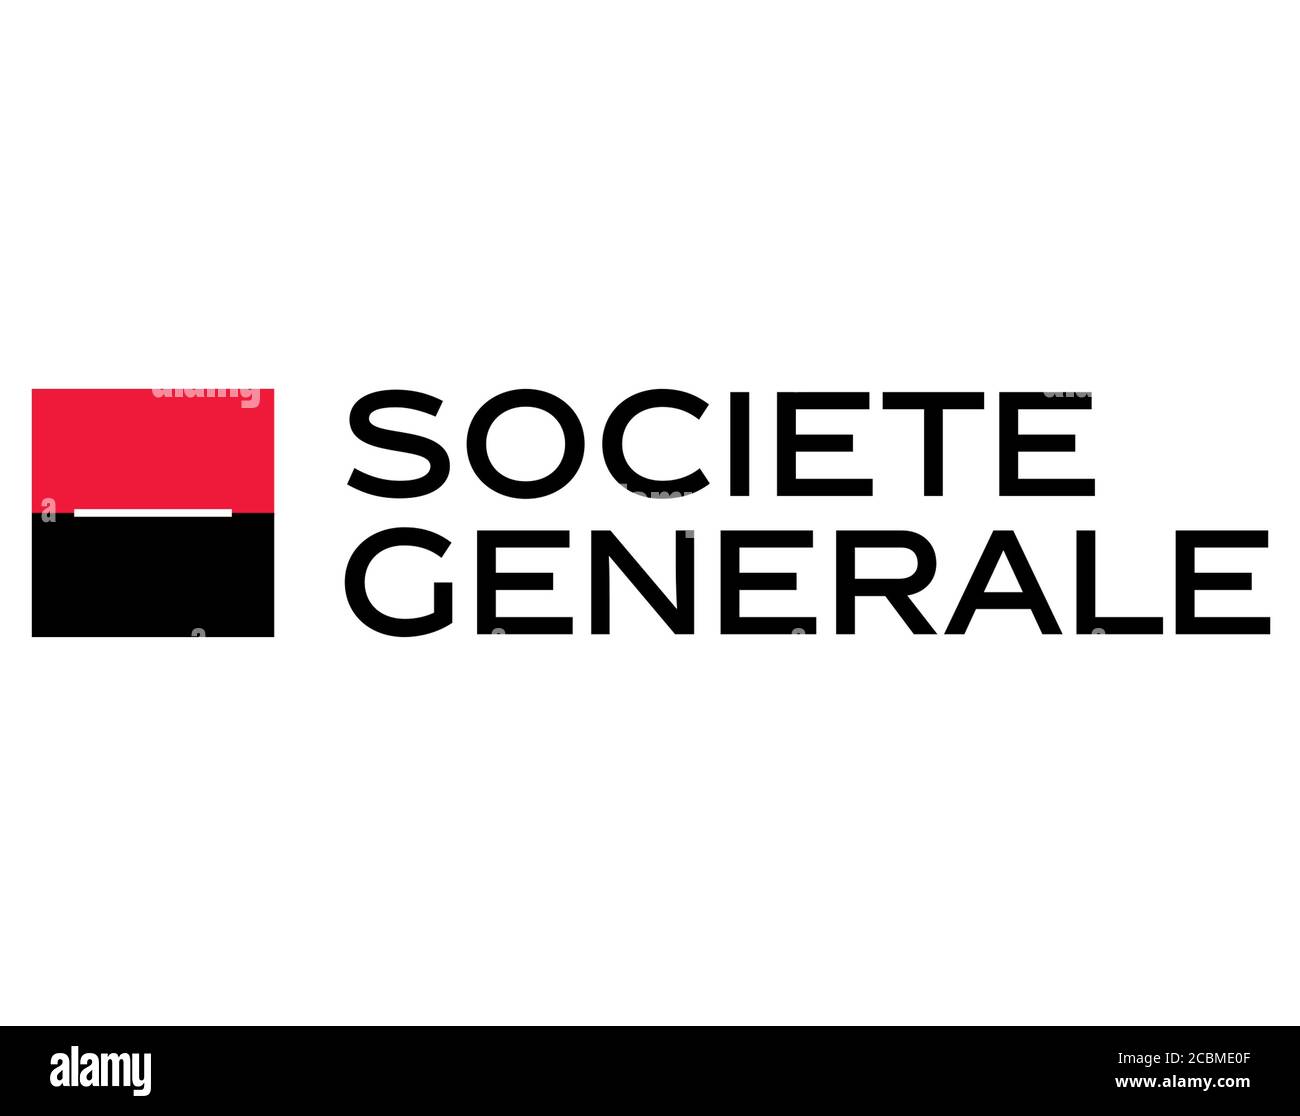 Societe Generale Stock Photo